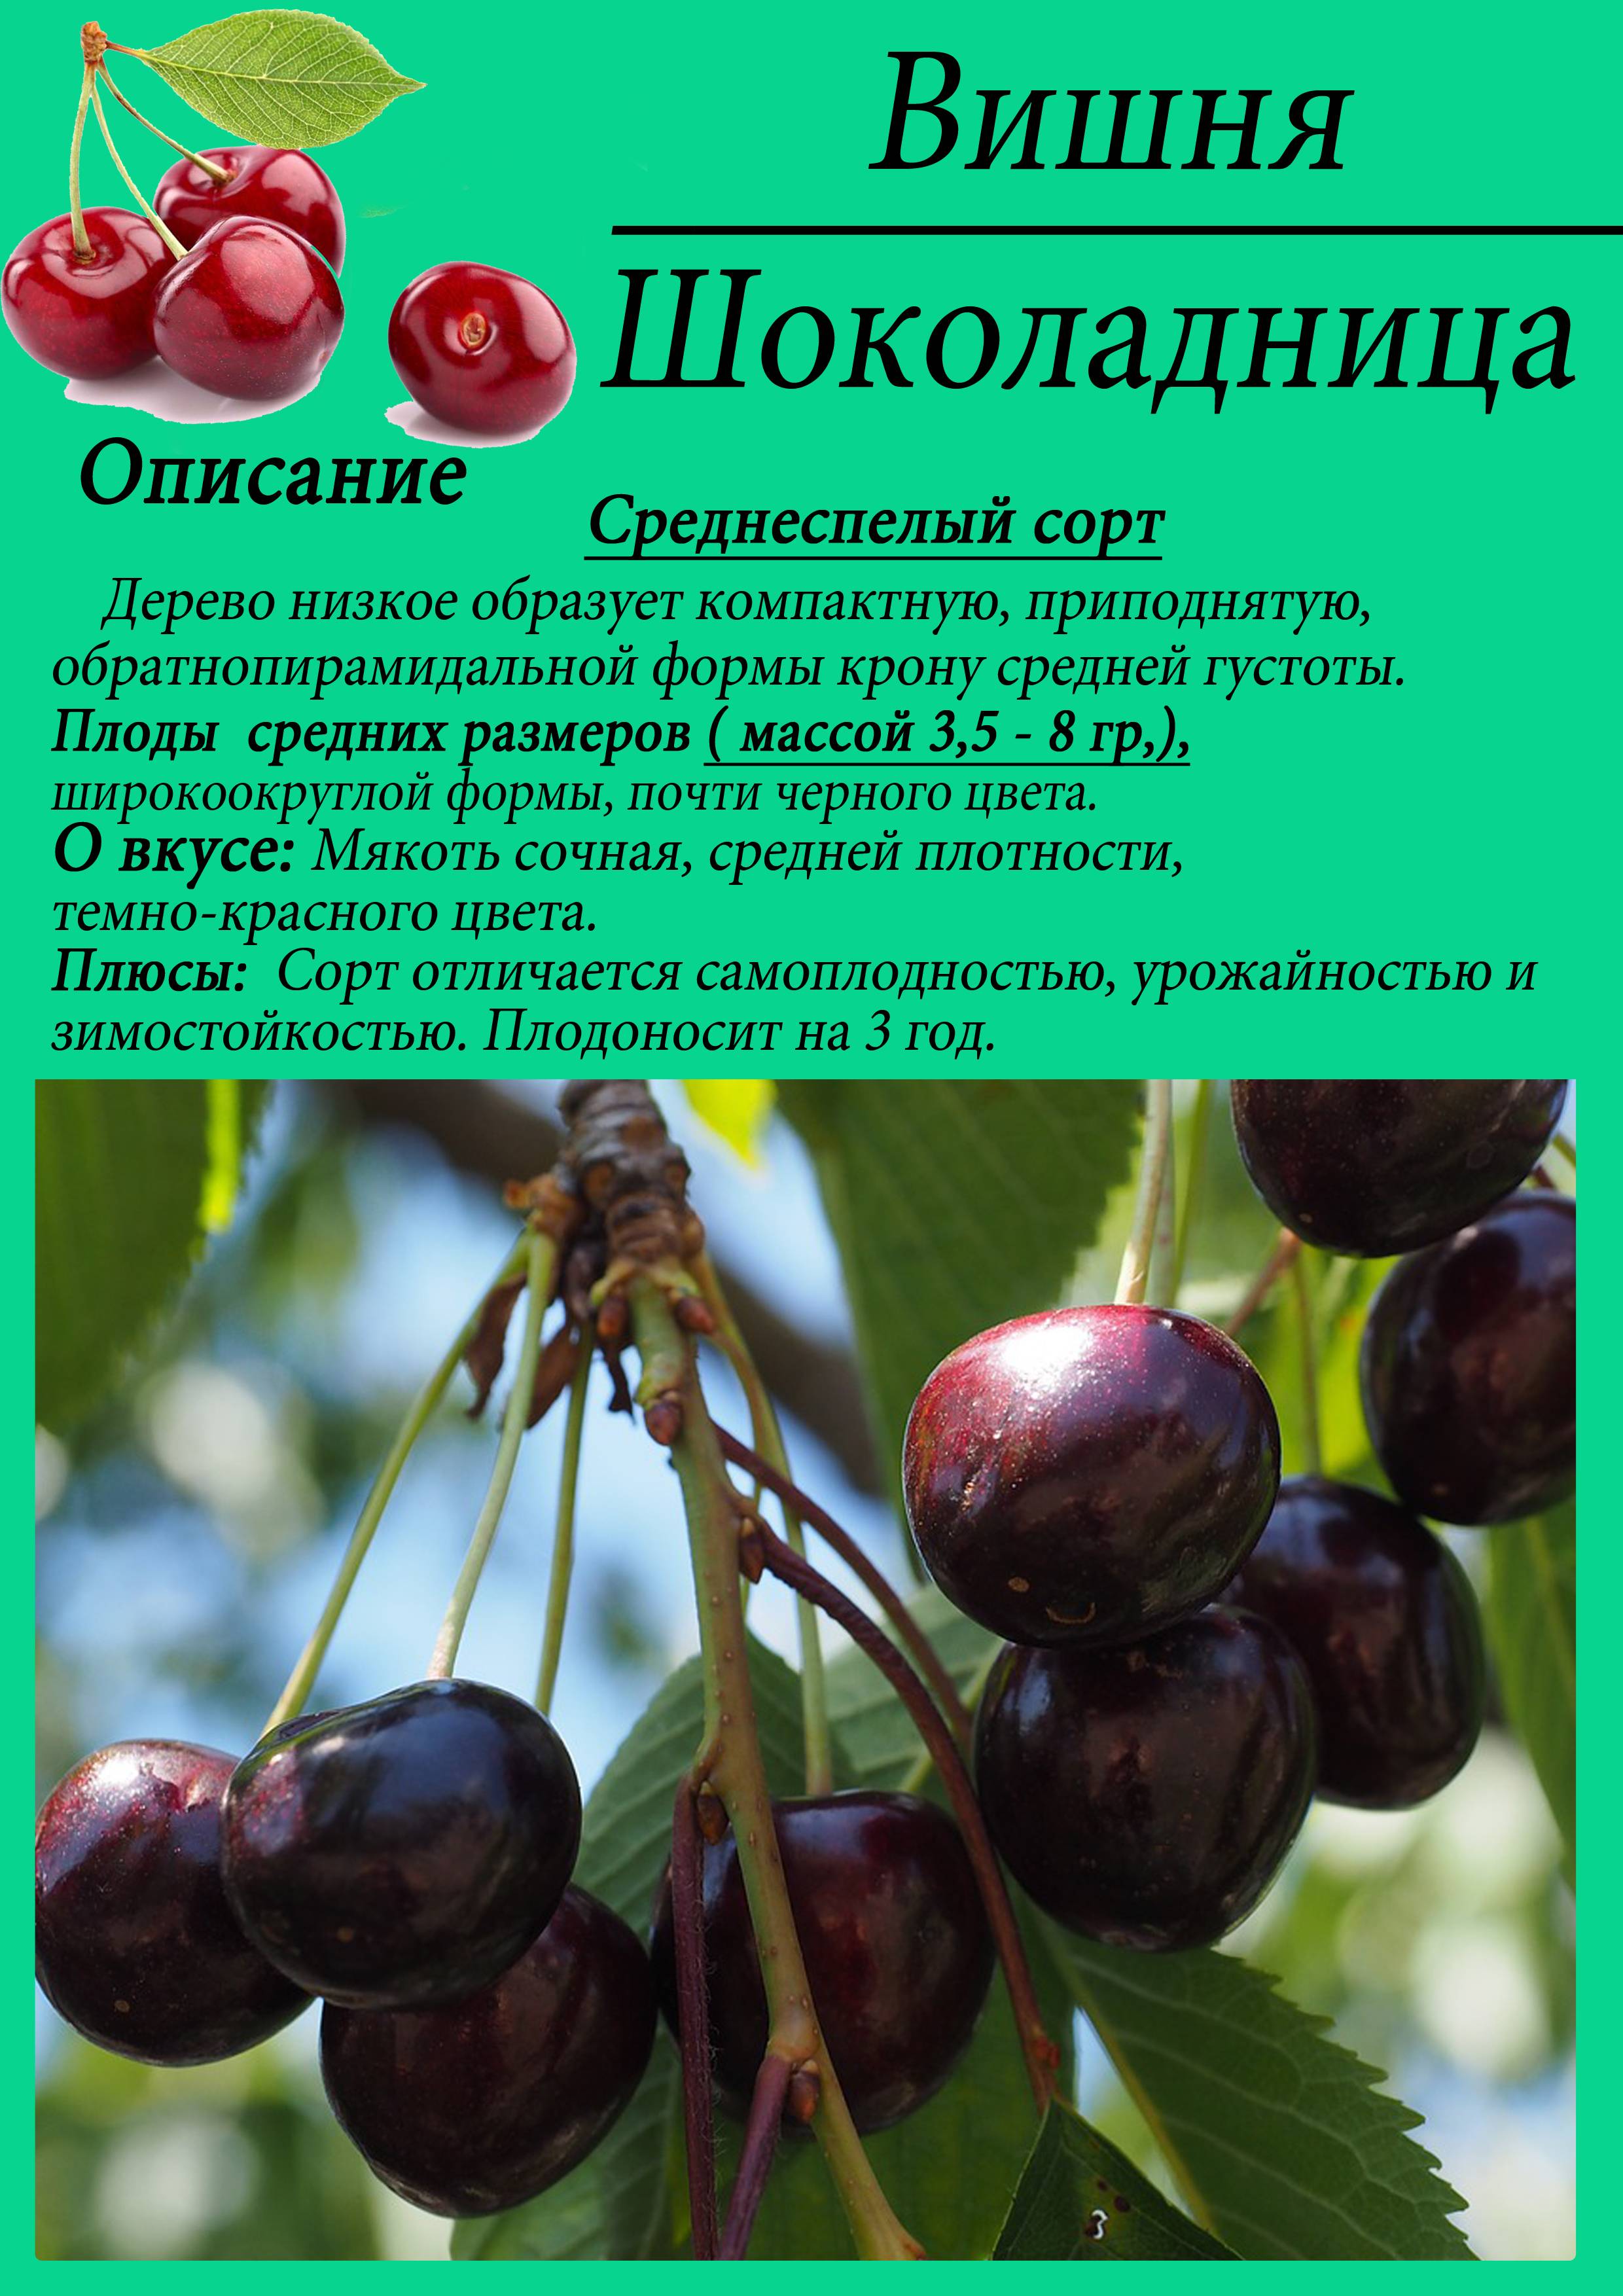 Магалебская вишня (антипка): описание вида и уход